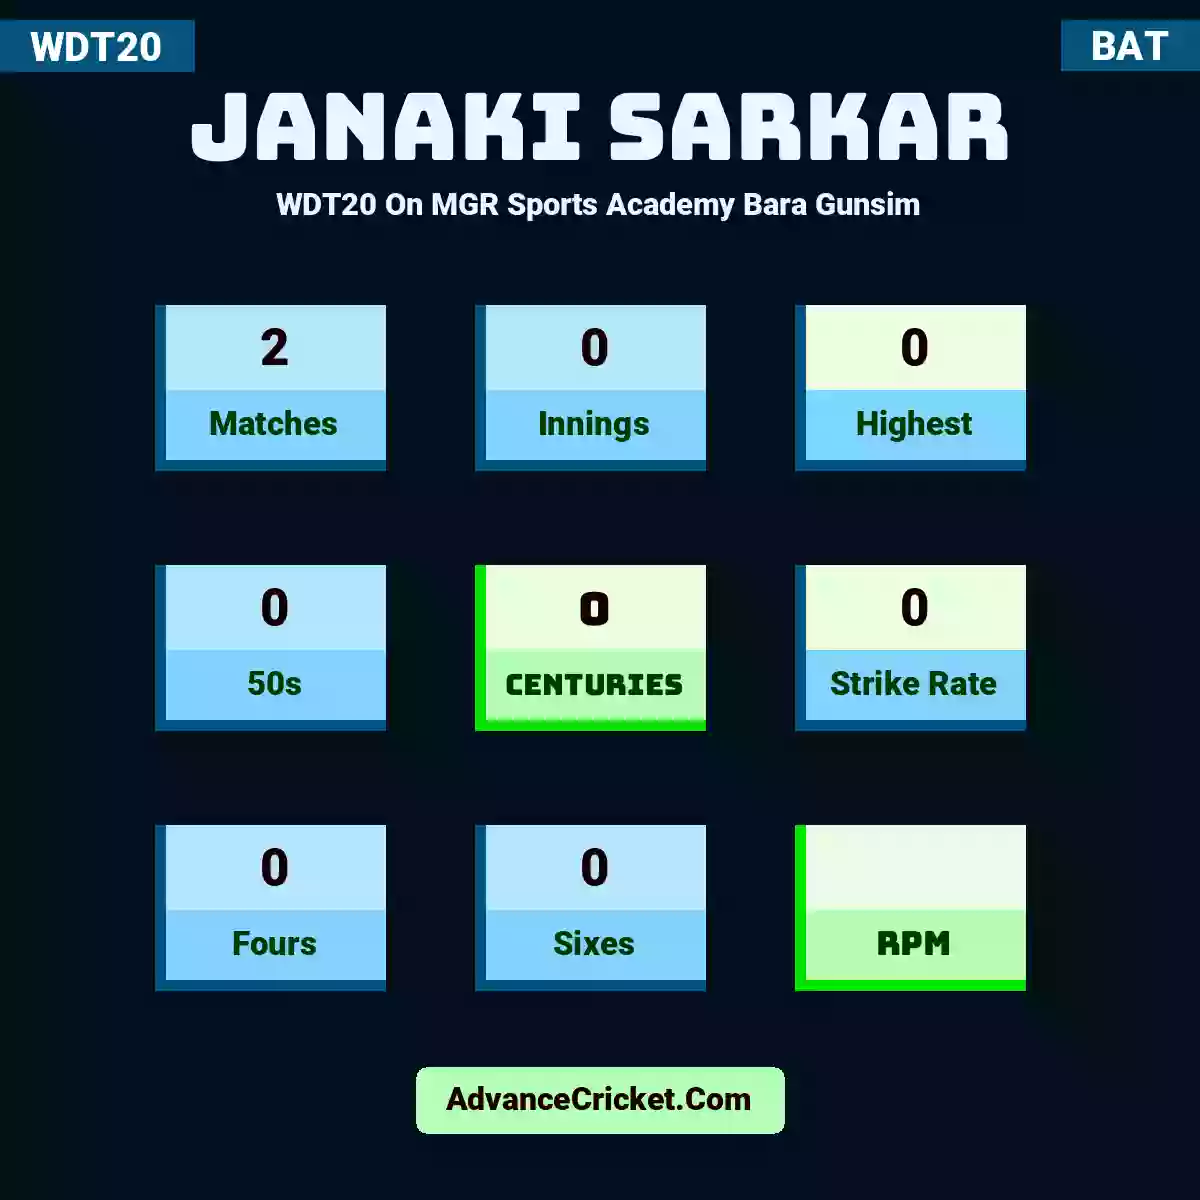 Janaki Sarkar WDT20  On MGR Sports Academy Bara Gunsim, Janaki Sarkar played 2 matches, scored 0 runs as highest, 0 half-centuries, and 0 centuries, with a strike rate of 0. J.Sarkar hit 0 fours and 0 sixes.